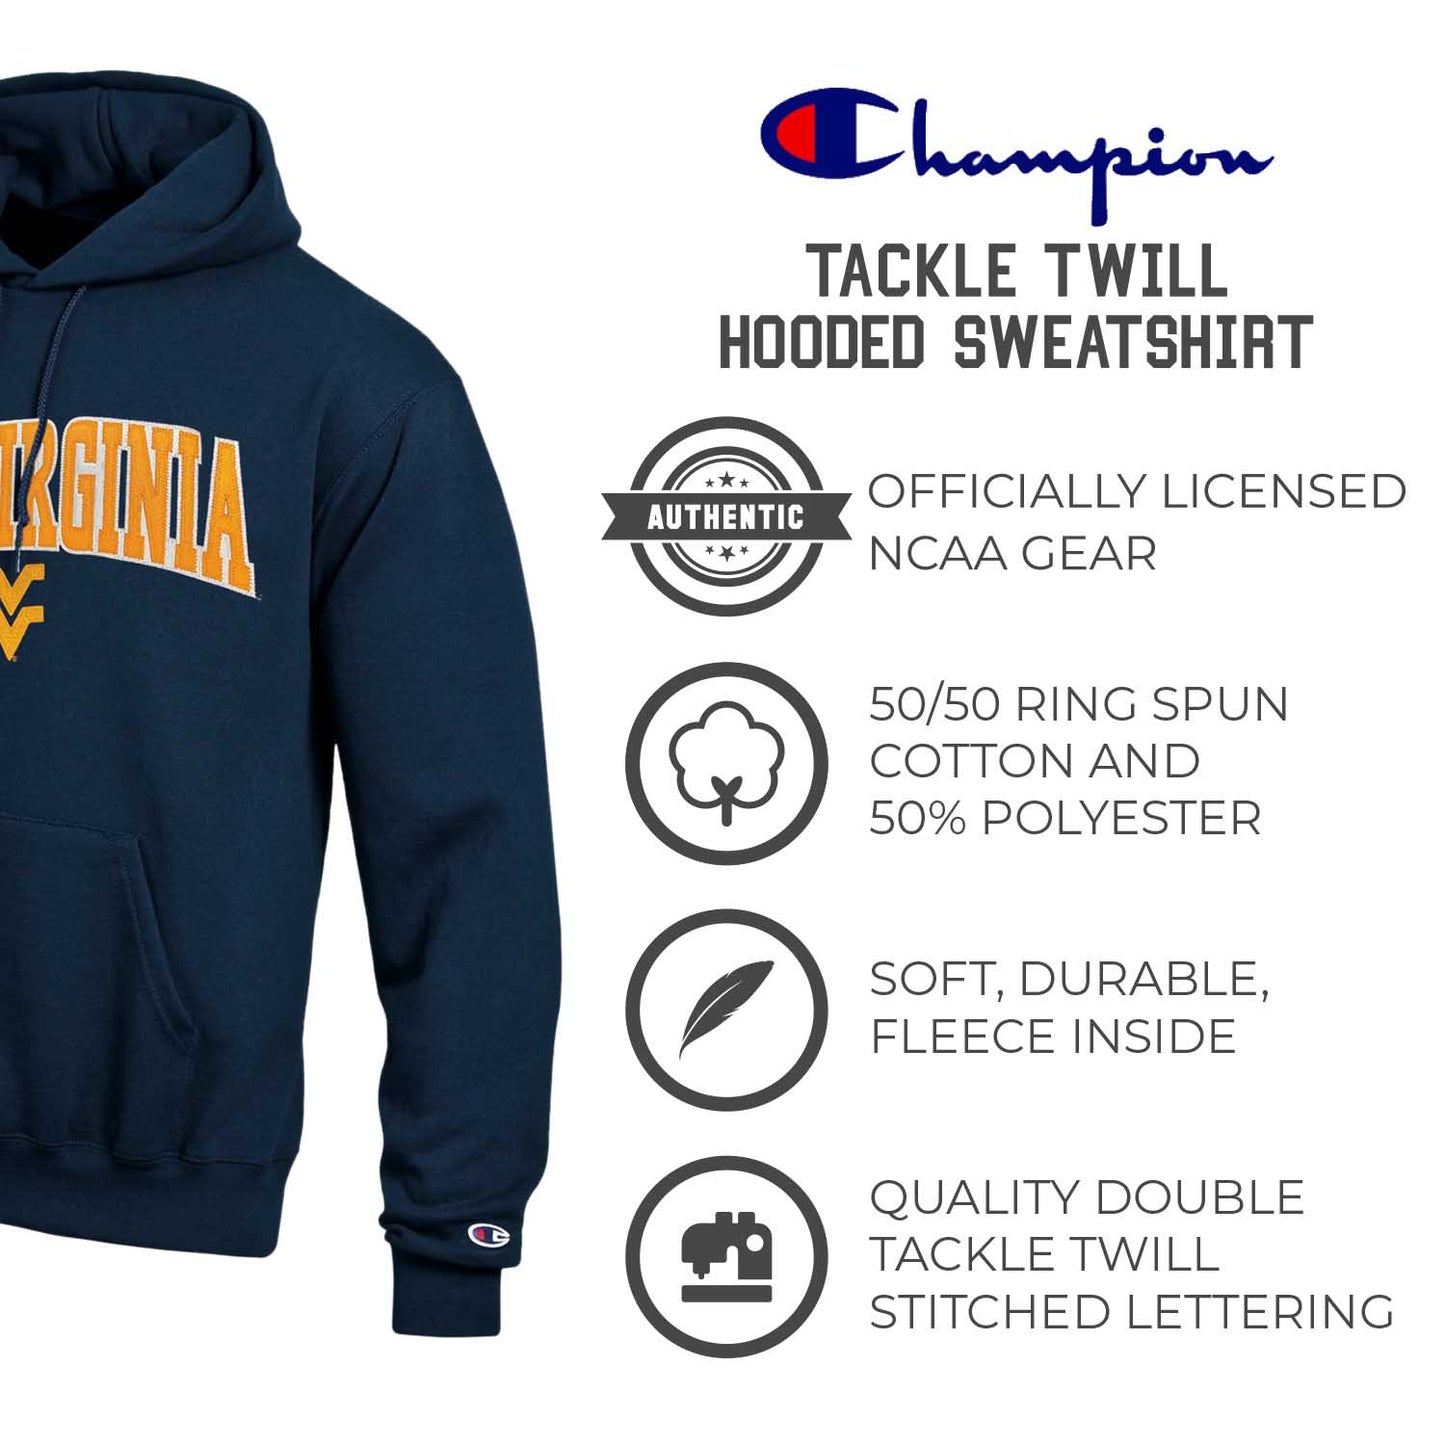 West Virginia Mountaineers Champion Adult Tackle Twill Hooded Sweatshirt - Navy